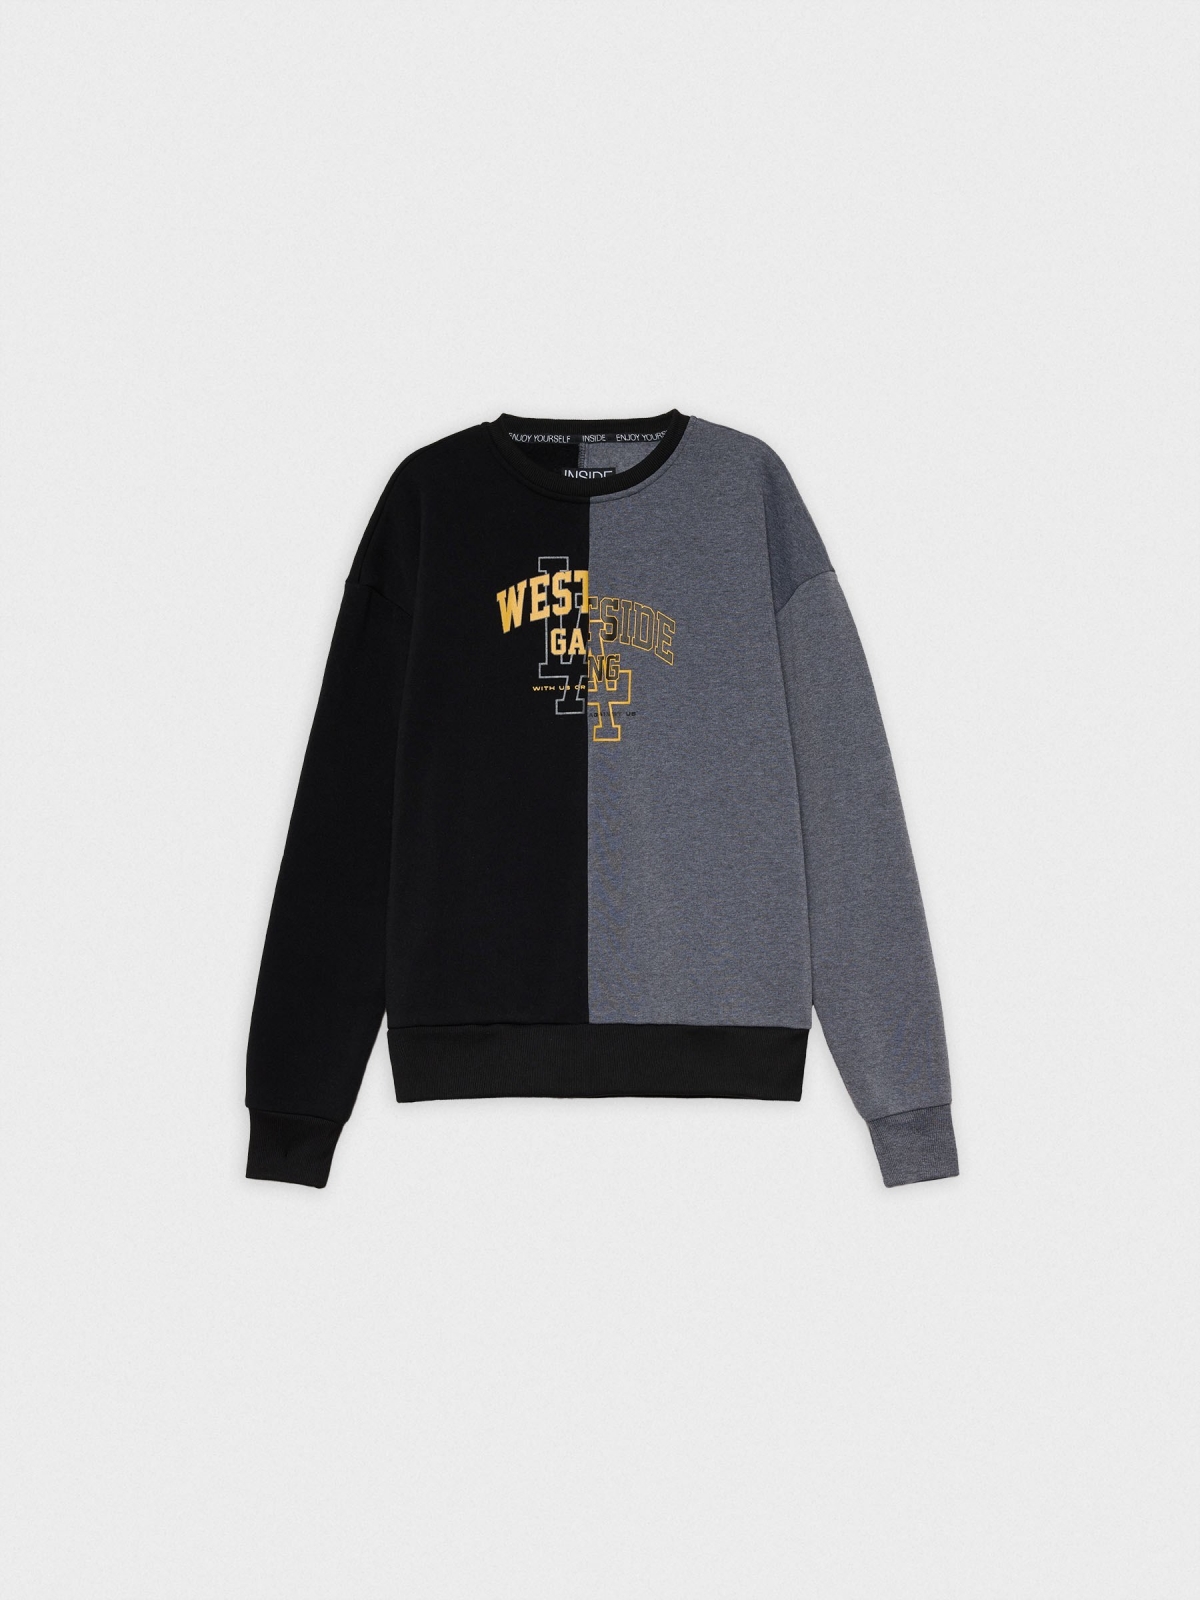  Westside Sweatshirt black